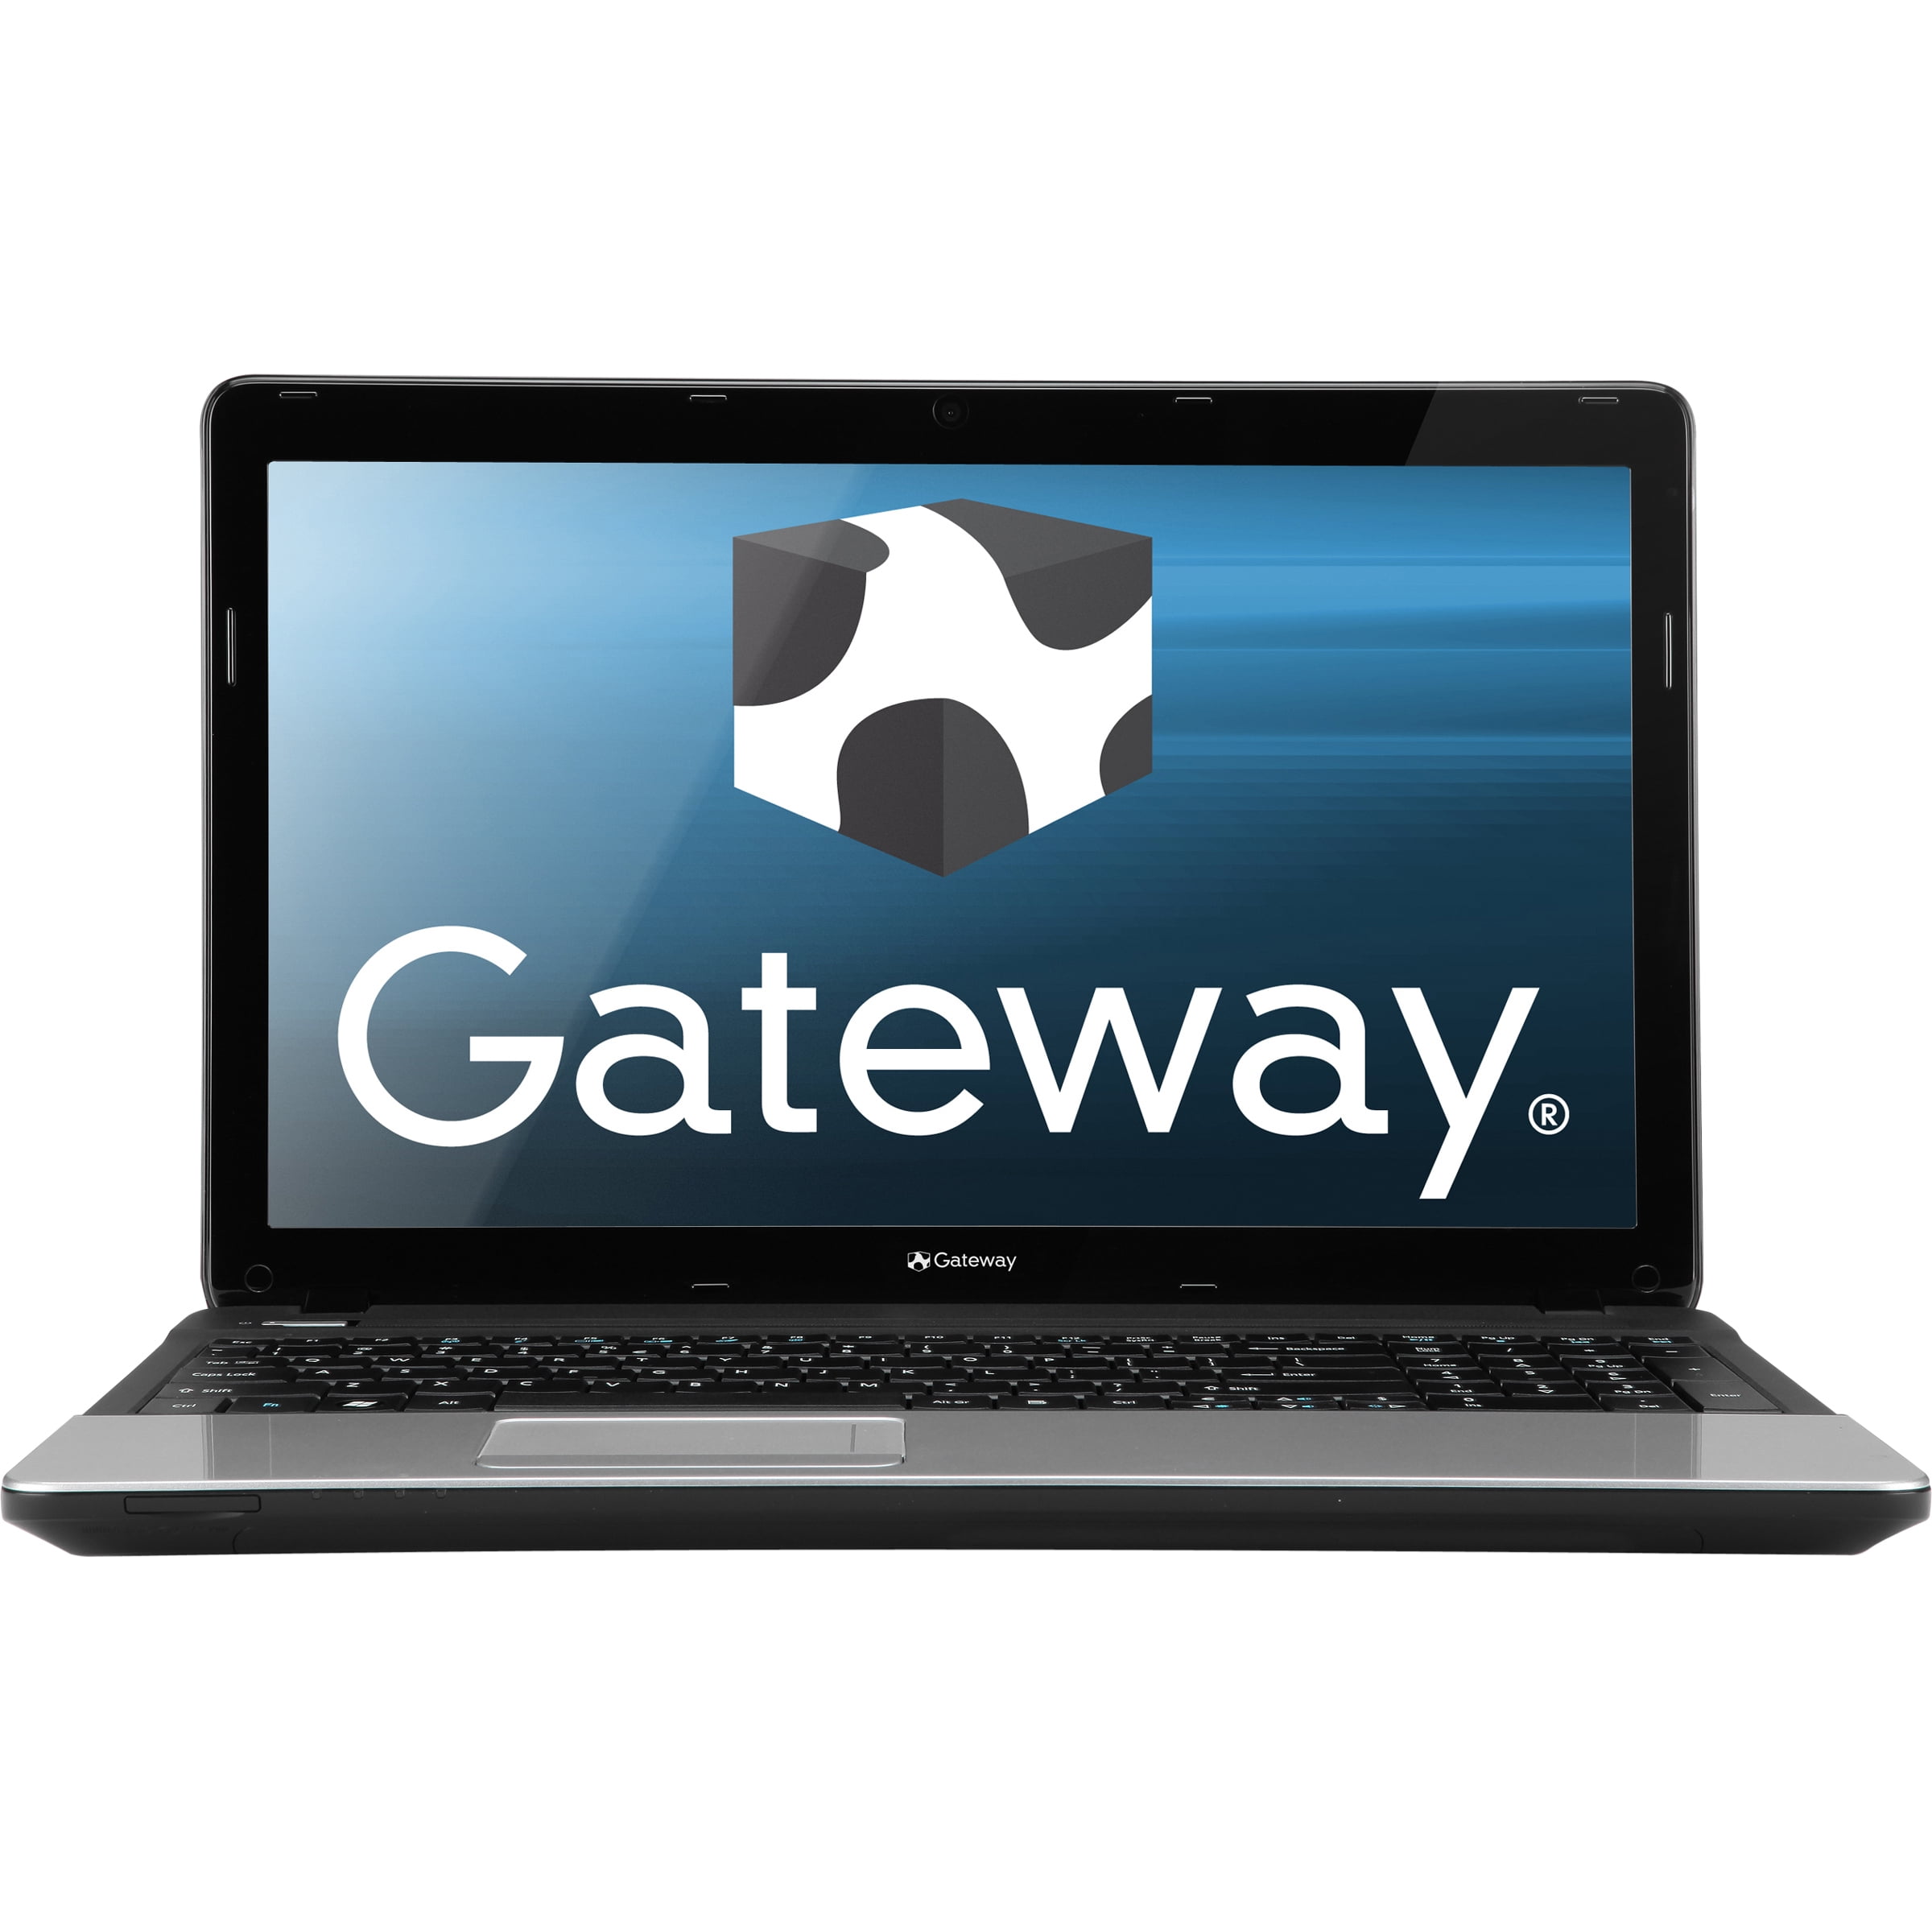 Gateway 15 6 Laptop Intel Pentium B960 4gb Ram 500gb Hd Dvd Writer Windows 8 Ne56r41u B9604g50mnks Walmart Com Walmart Com